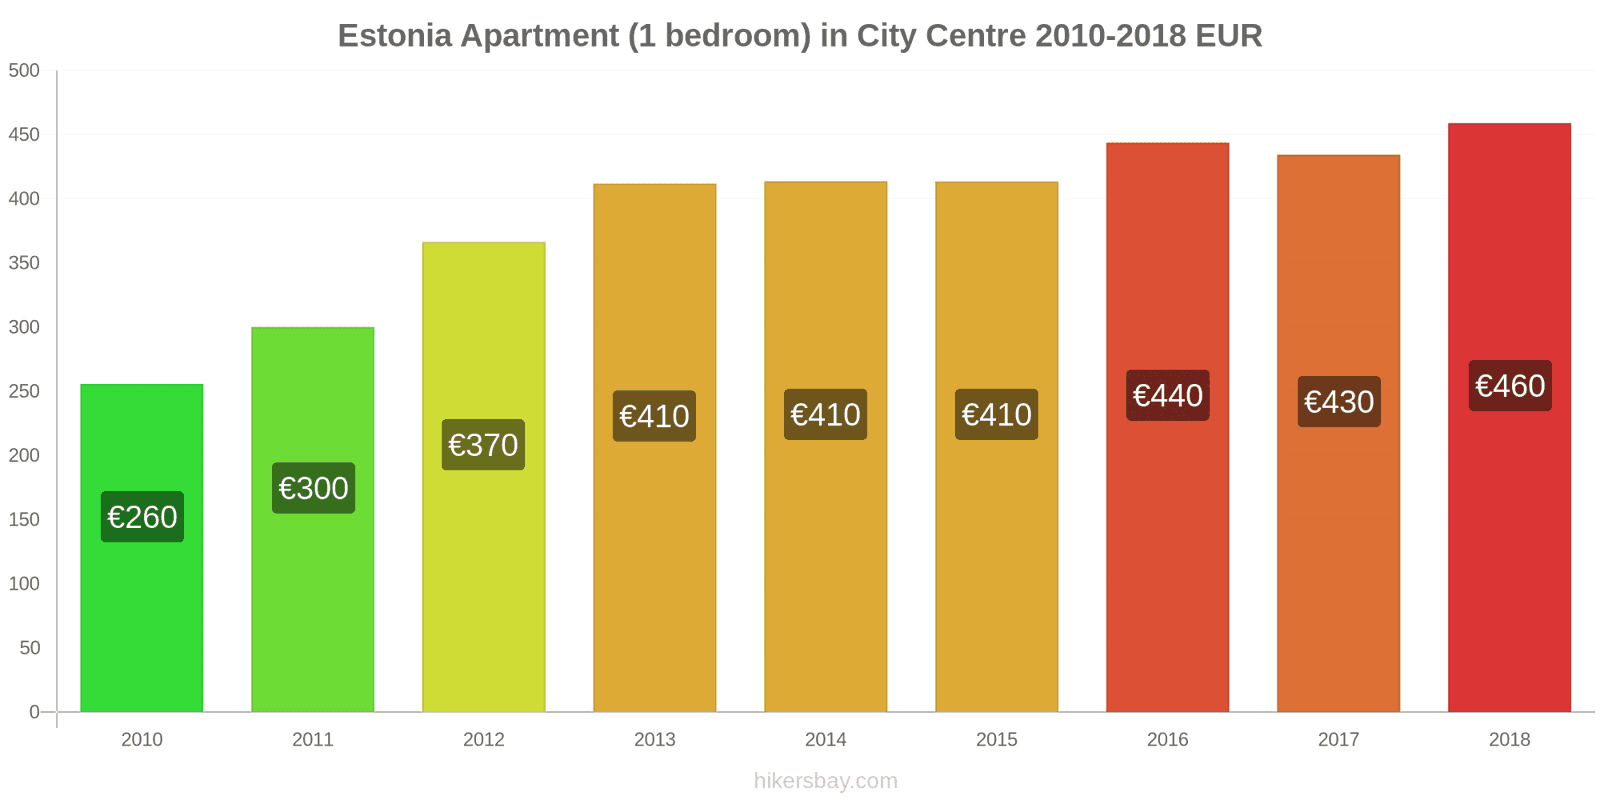 Estonia price changes Apartment (1 bedroom) in city centre hikersbay.com